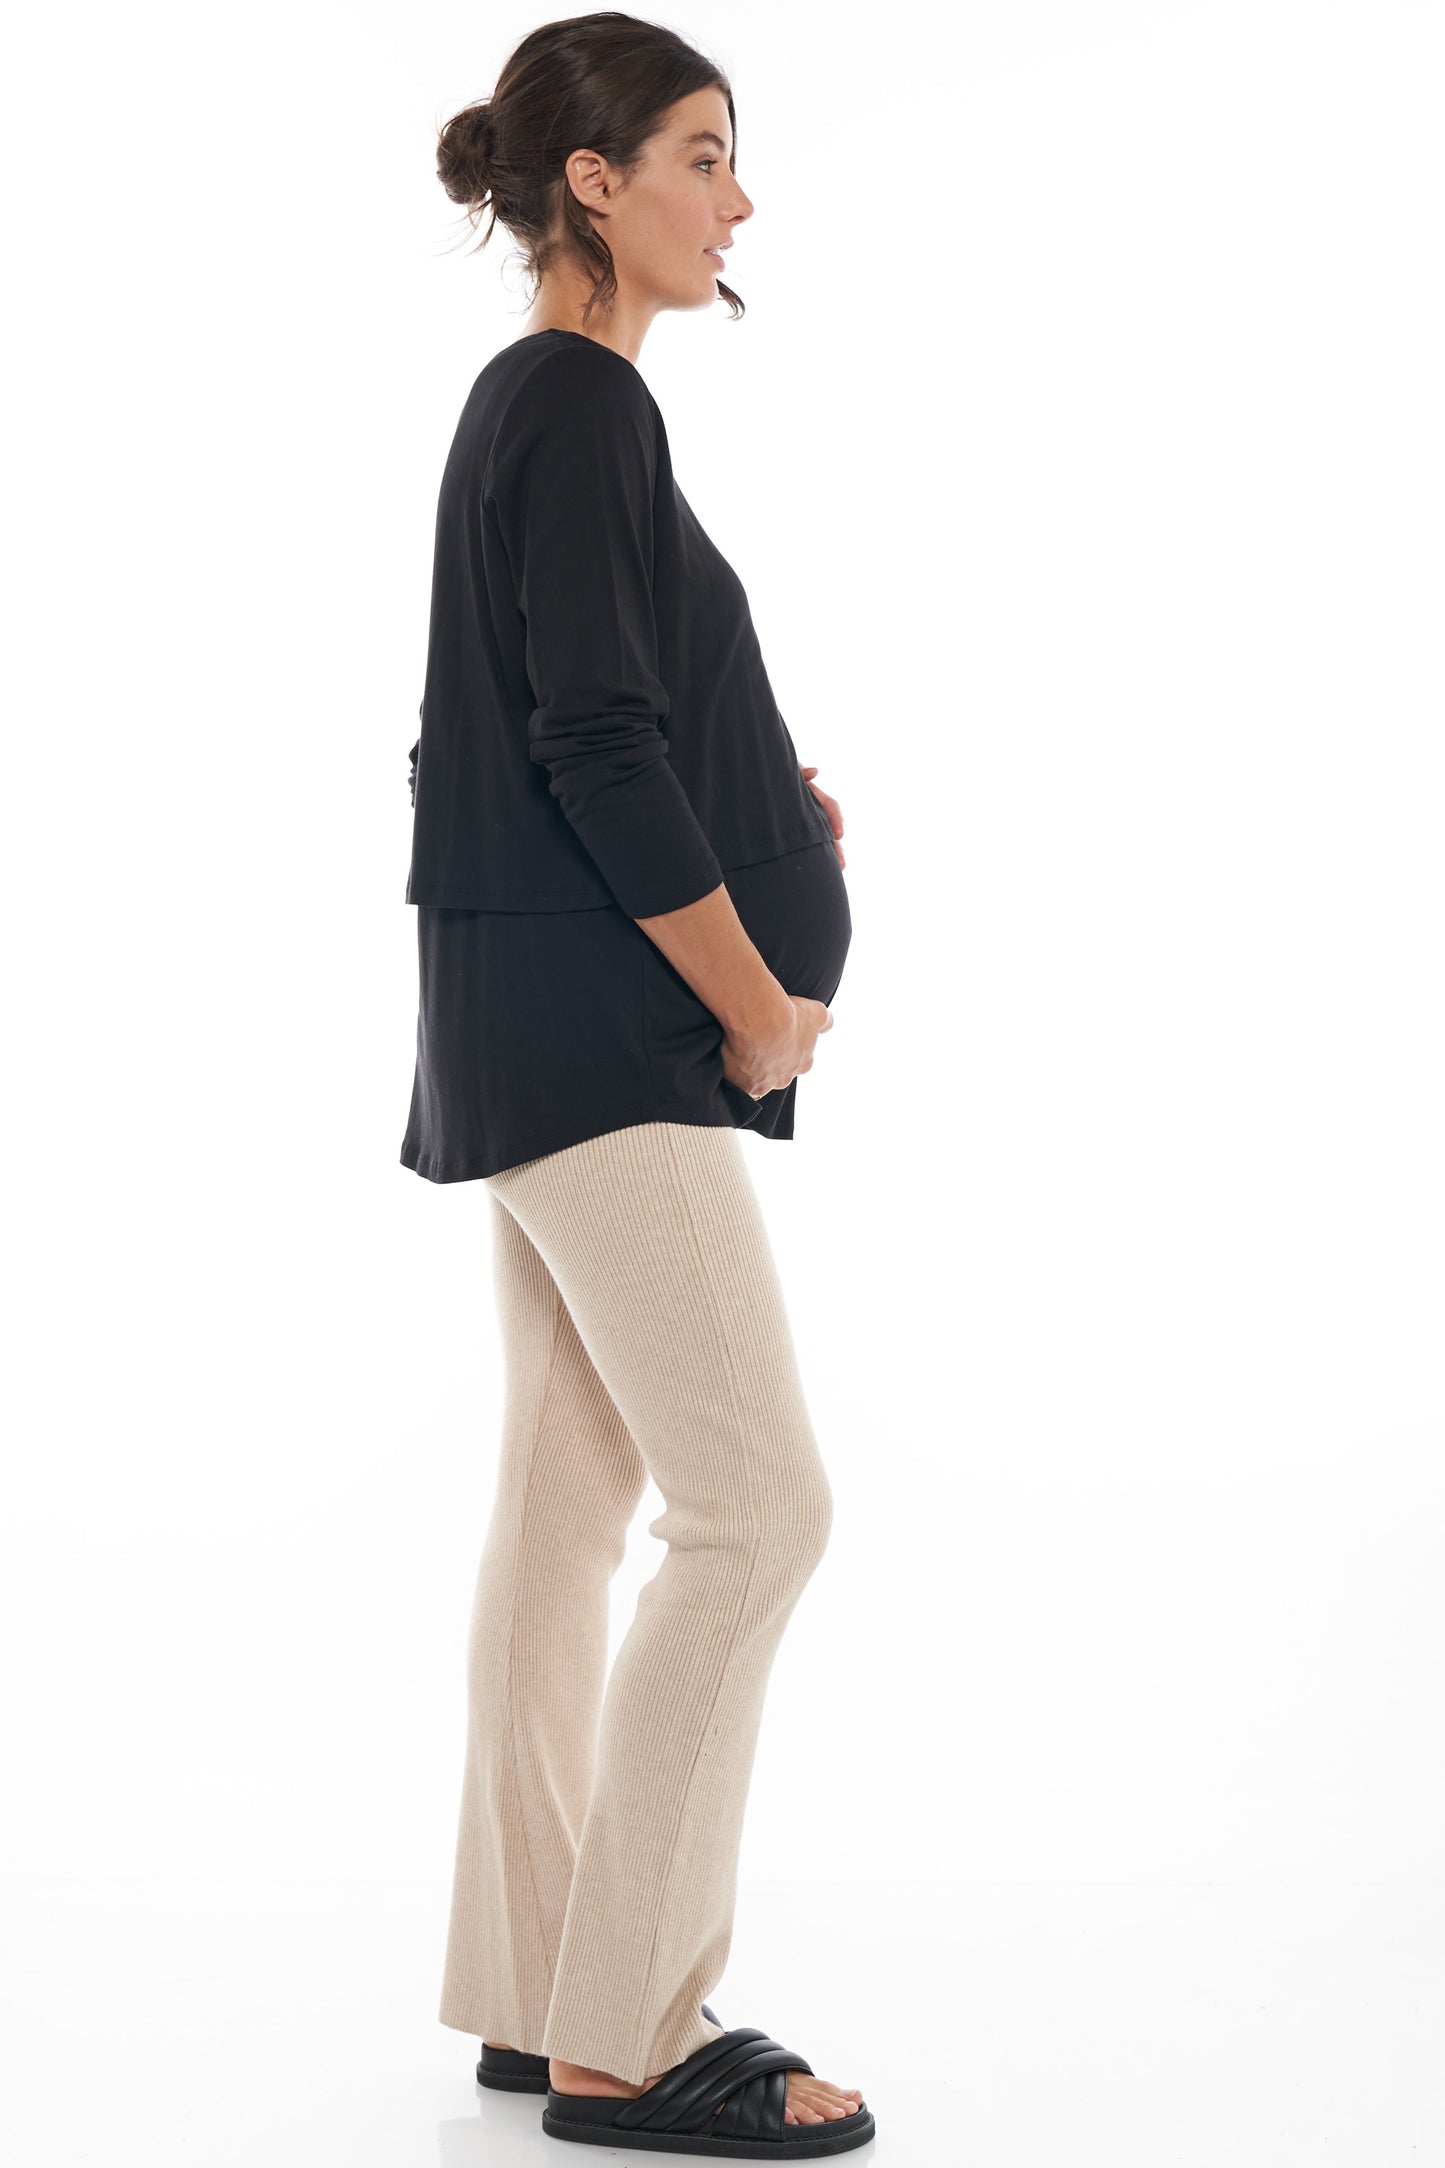 long sleeve maternity top black - image 2